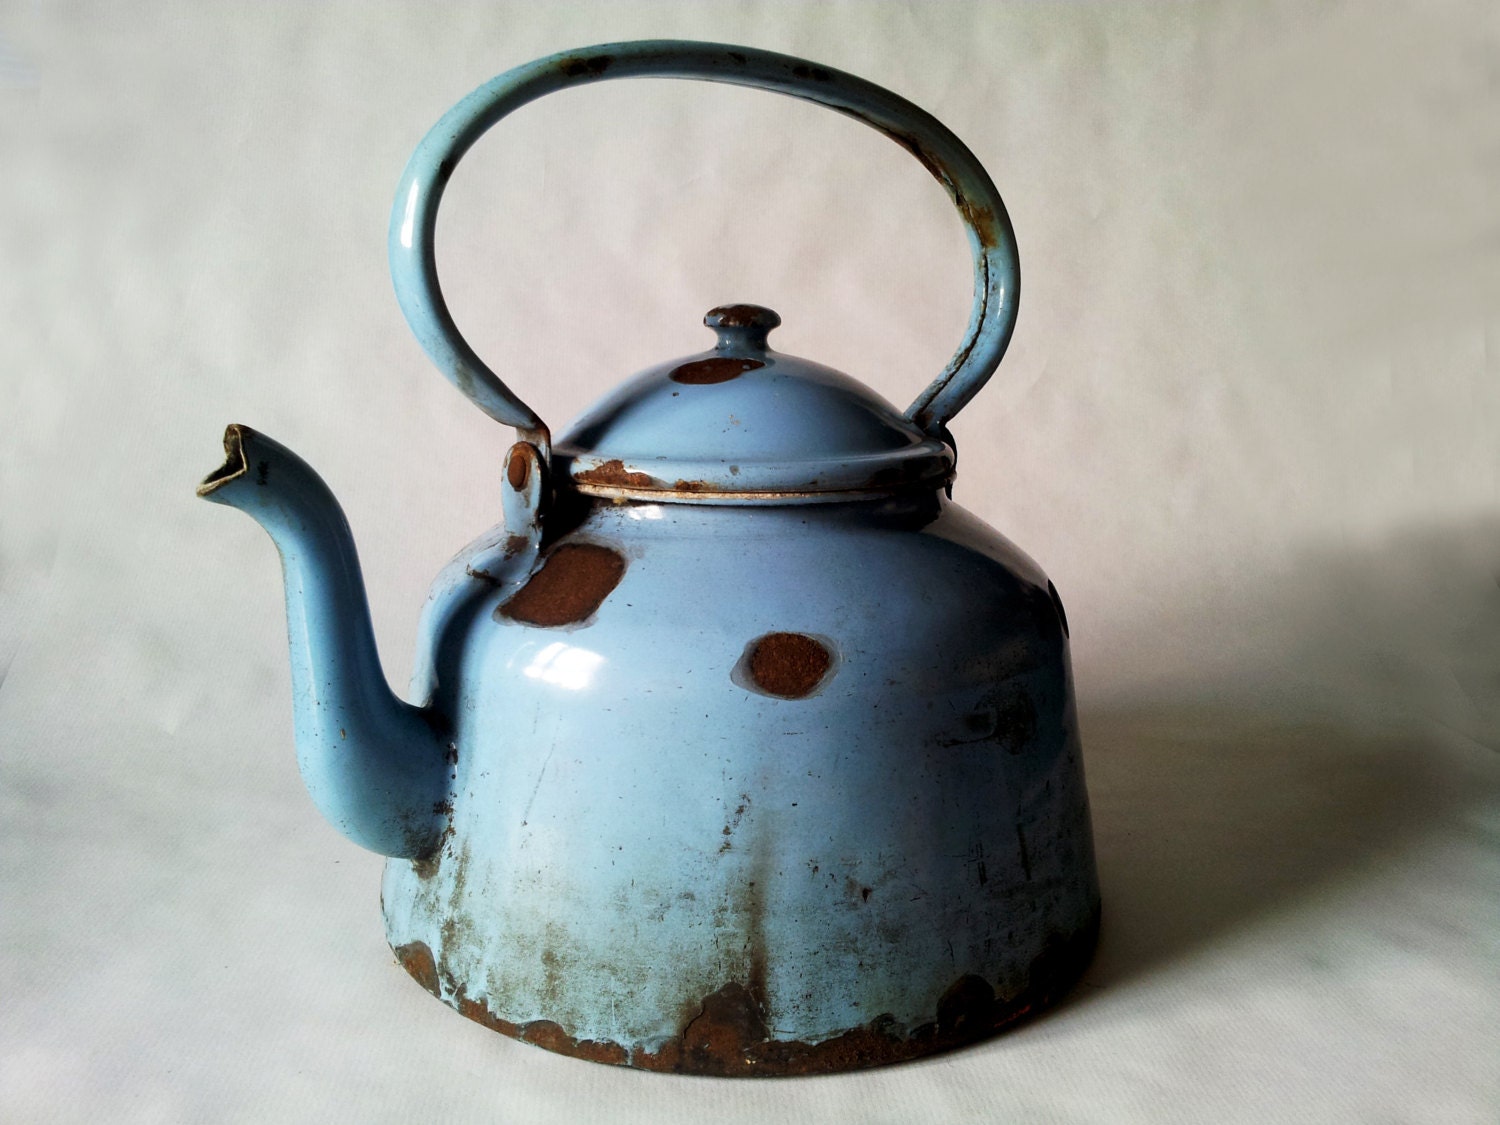 French Vintage ENAMELWARE TEAPOT kettle rustic blue LARGE - PetitesChosesDeLaVie